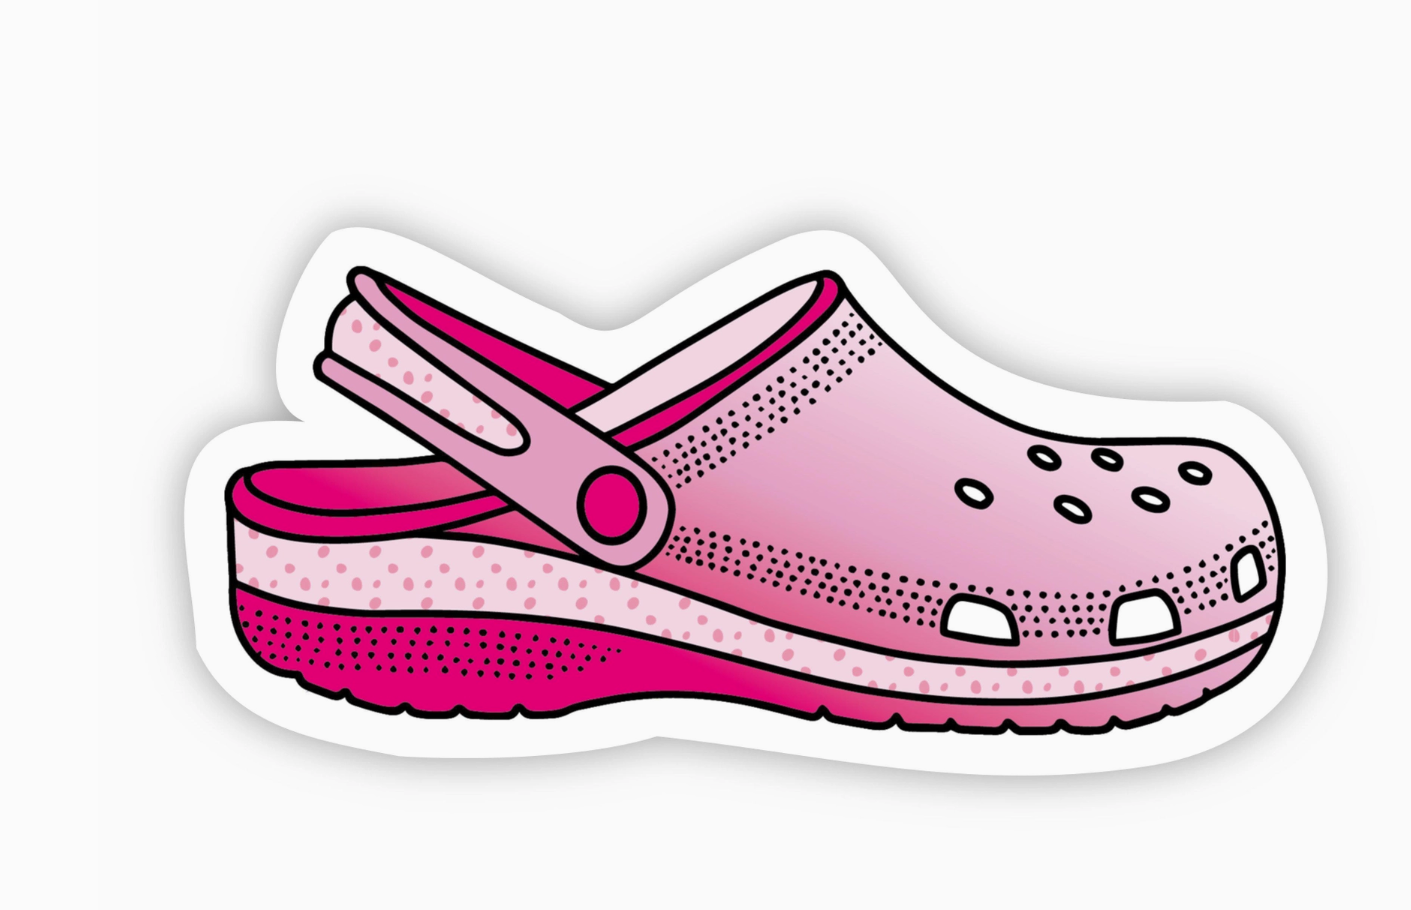 Croc Pink Aesthetic Sticker